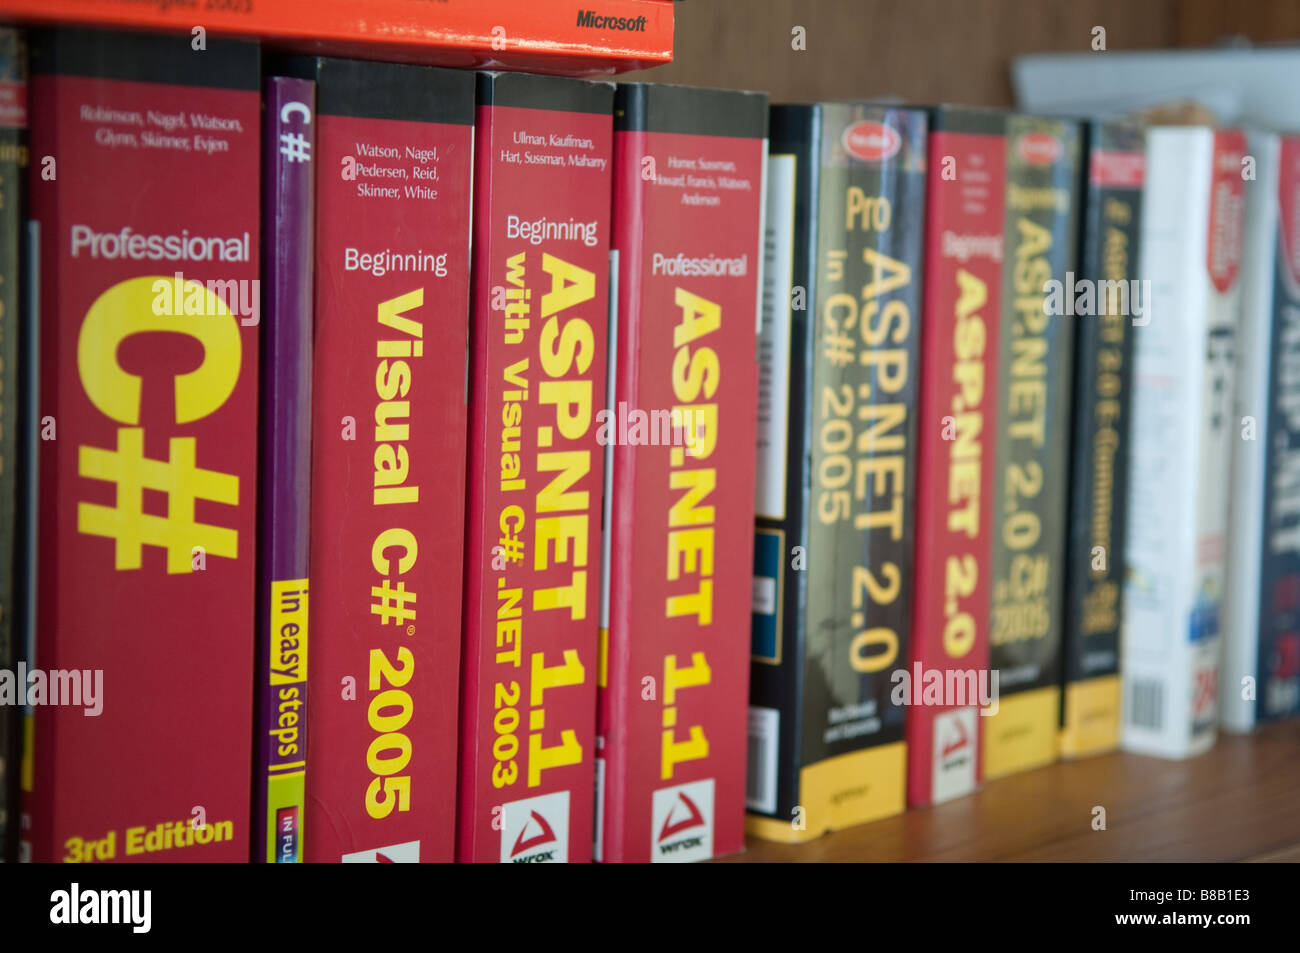 Software engineering/programming books on a bookshelf Stock Photo